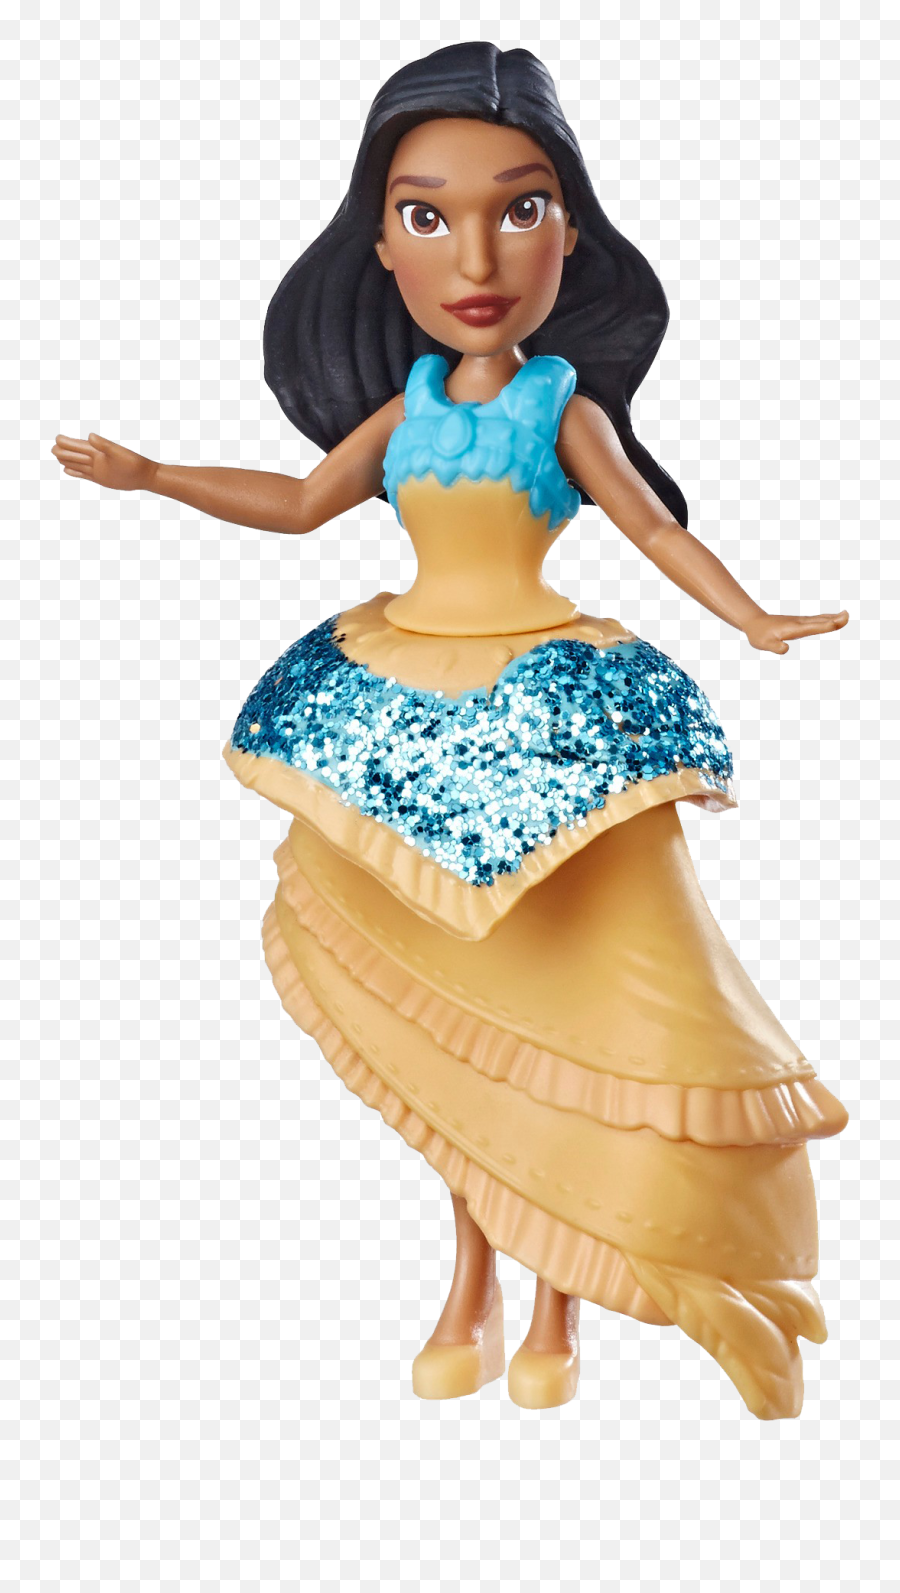 Download Pocahontas Png Image File - Disney Princess Pocahontas,Pocahontas Png